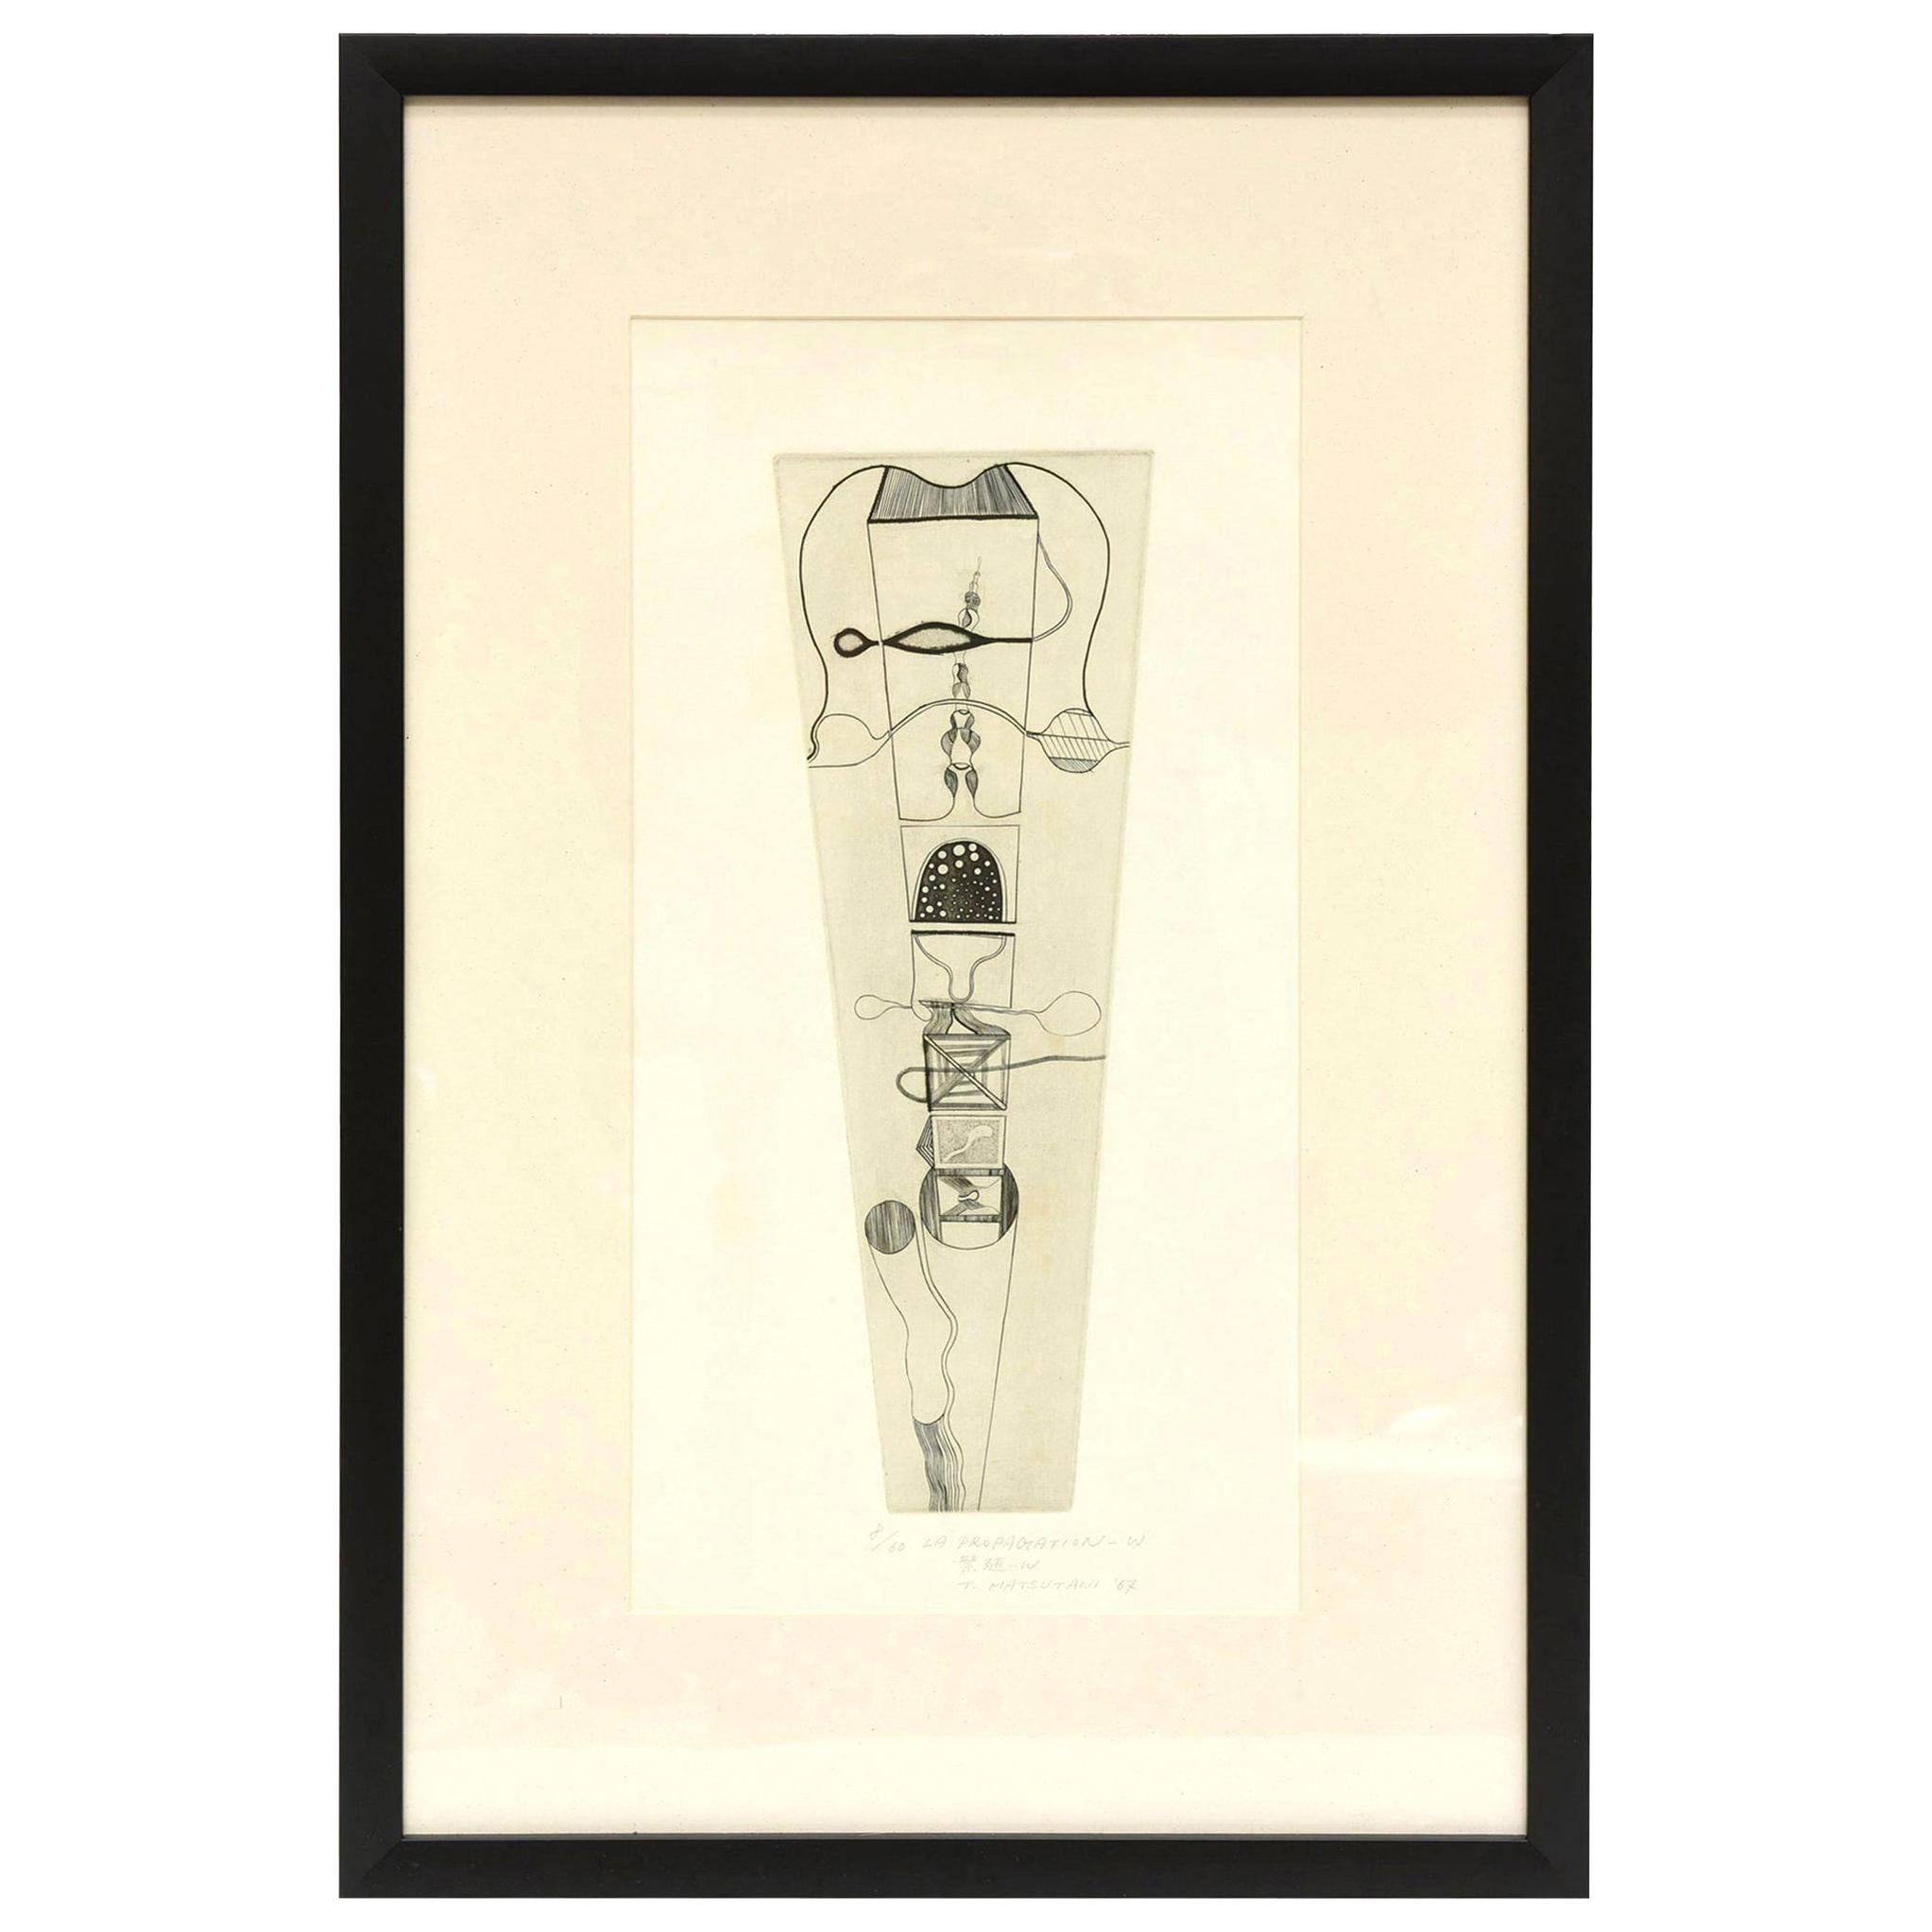 Takashi Matsutani Vintage Japanese Etching Titled "La Propagation" Framed